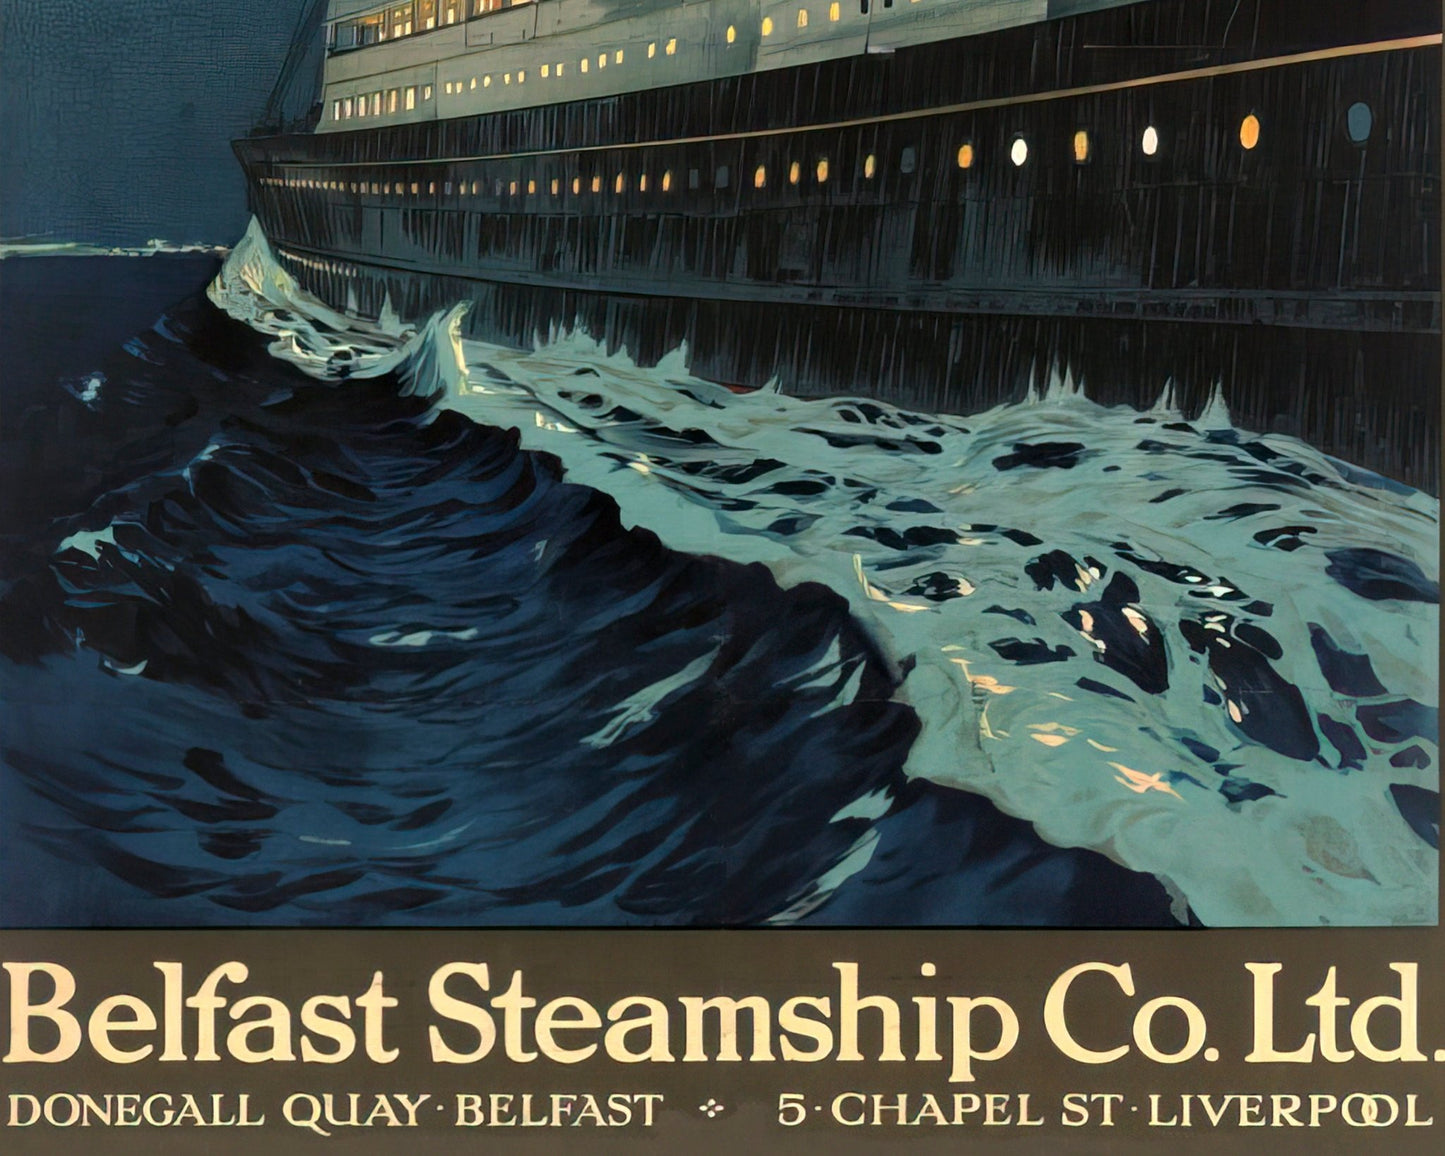 Kenneth Shoesmith "Liverpool & Belfast " (c.1925 - 1930) - Mabon Gallery